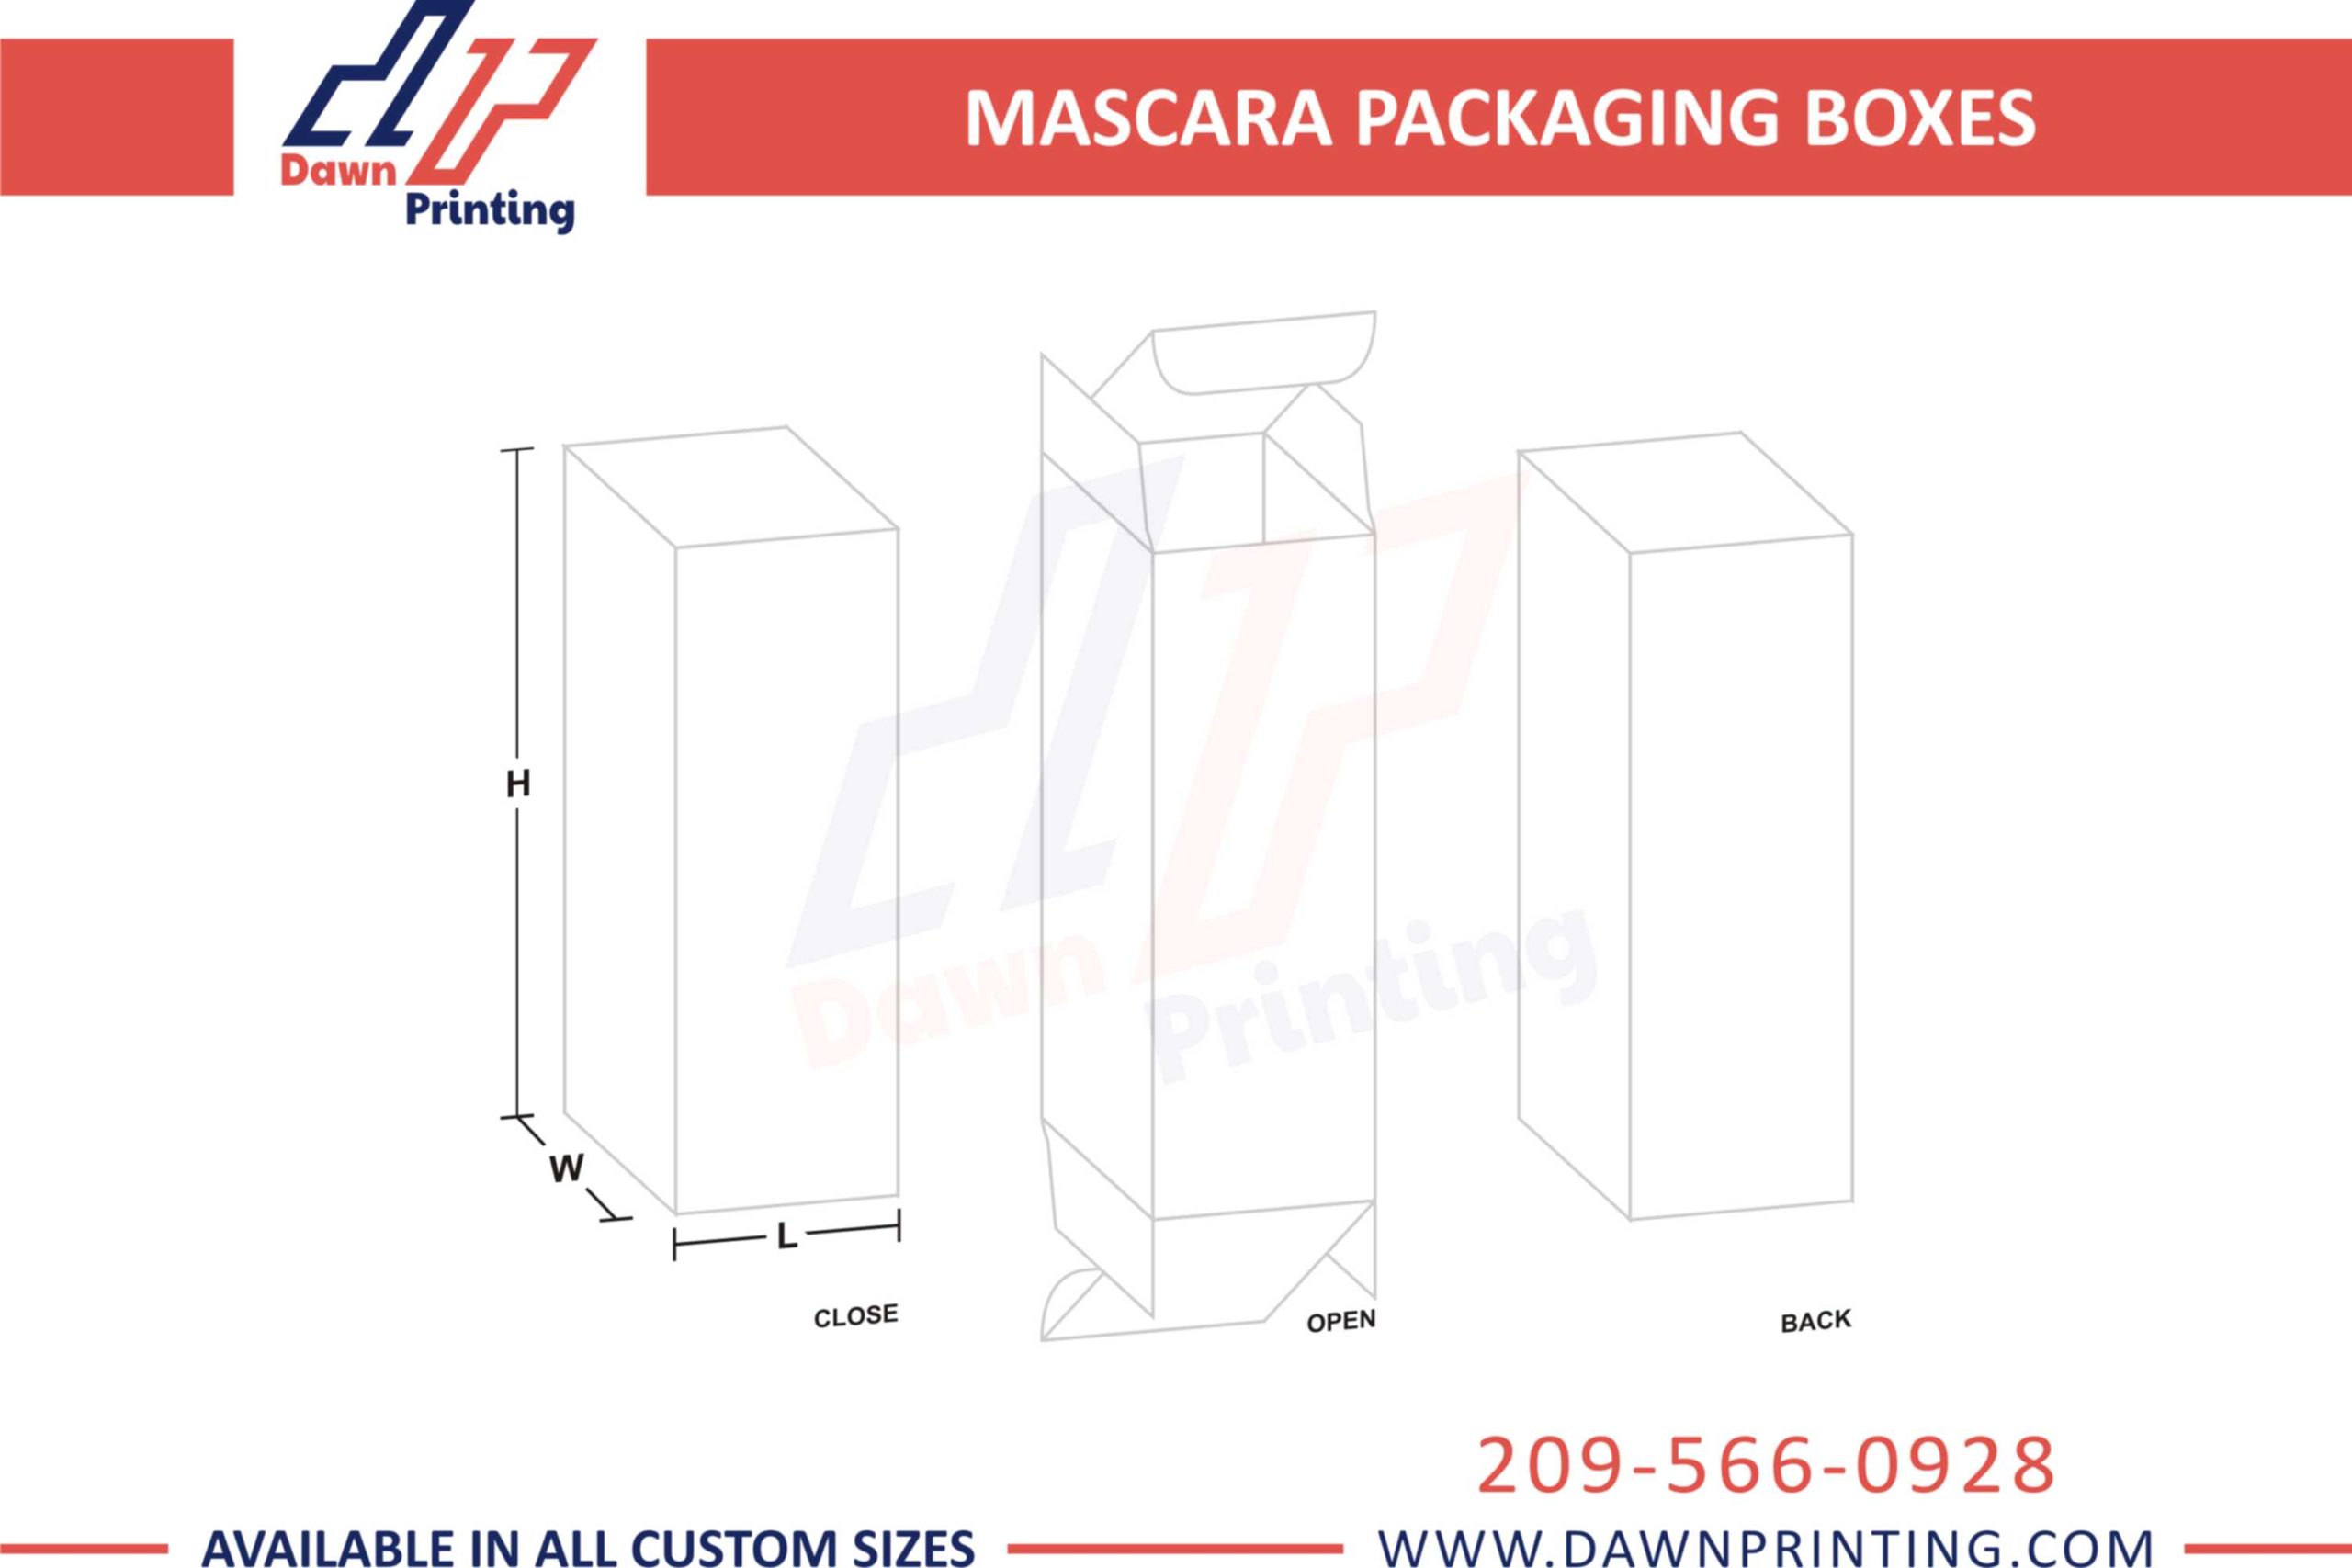 3D Customized Mascara Box Design Template - Dawn Printing